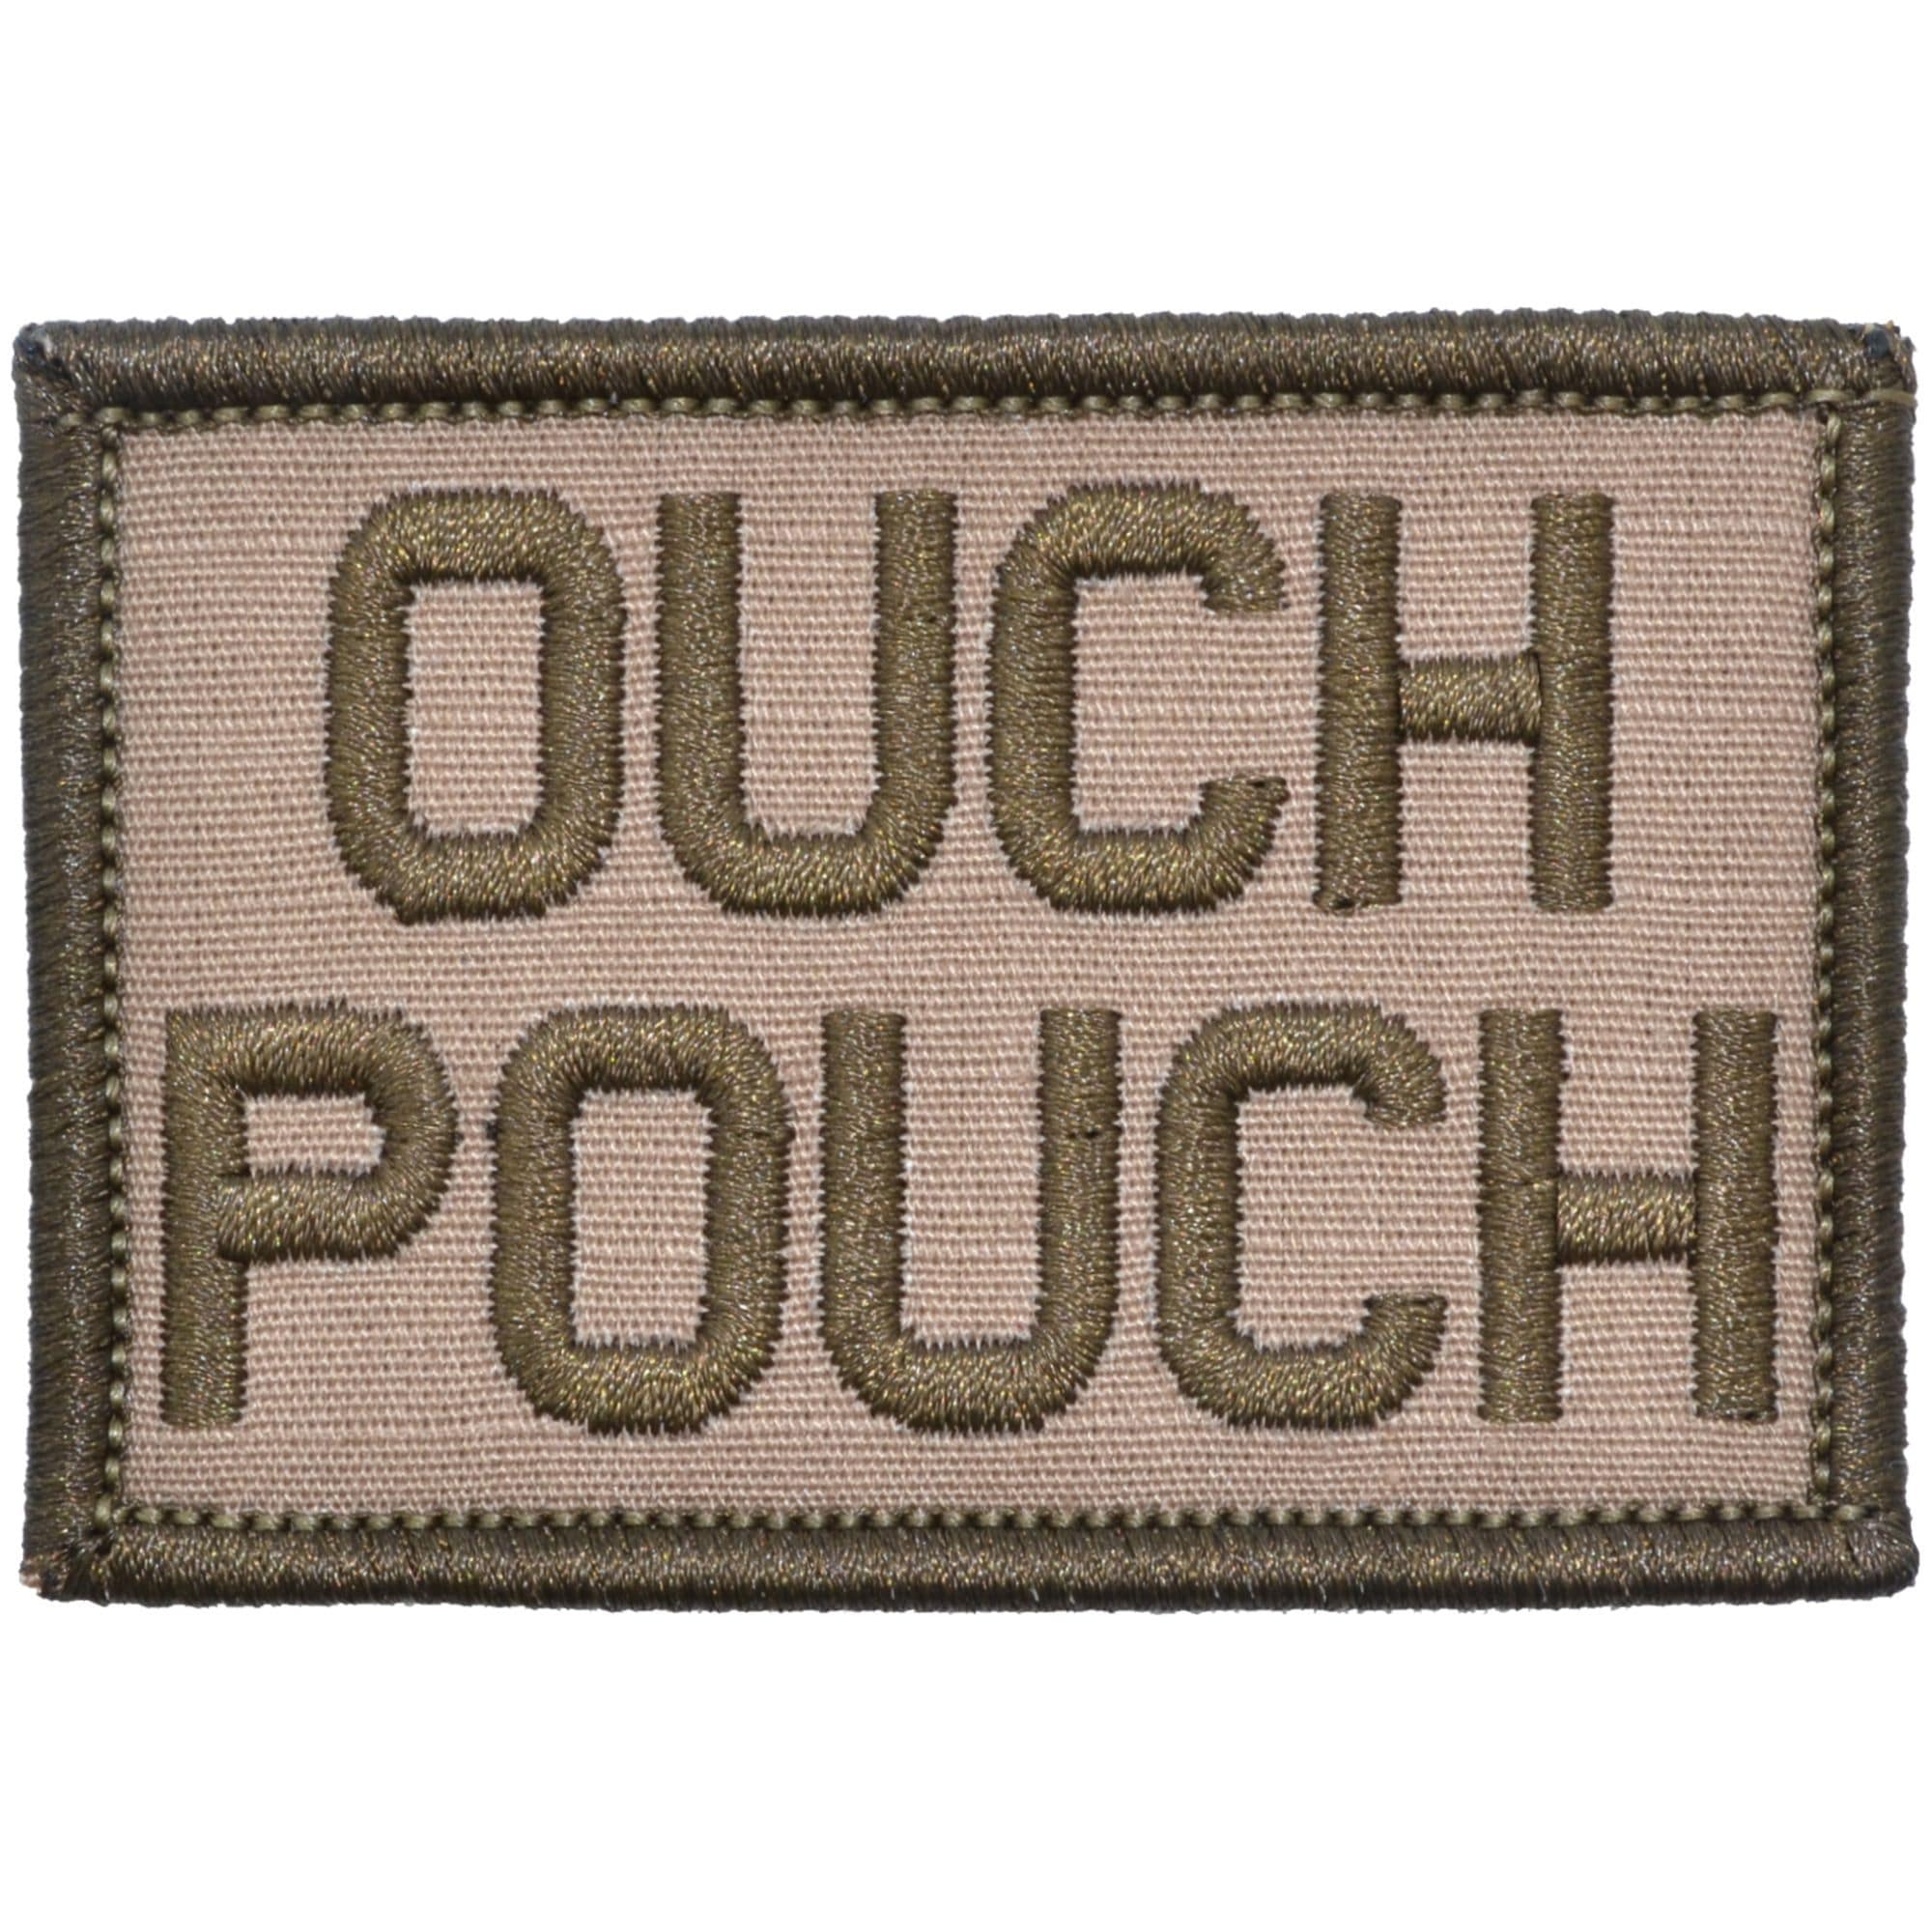 IR ouch pouch 2x3 5 multicam OCP tactical morale lazer cut hook patch